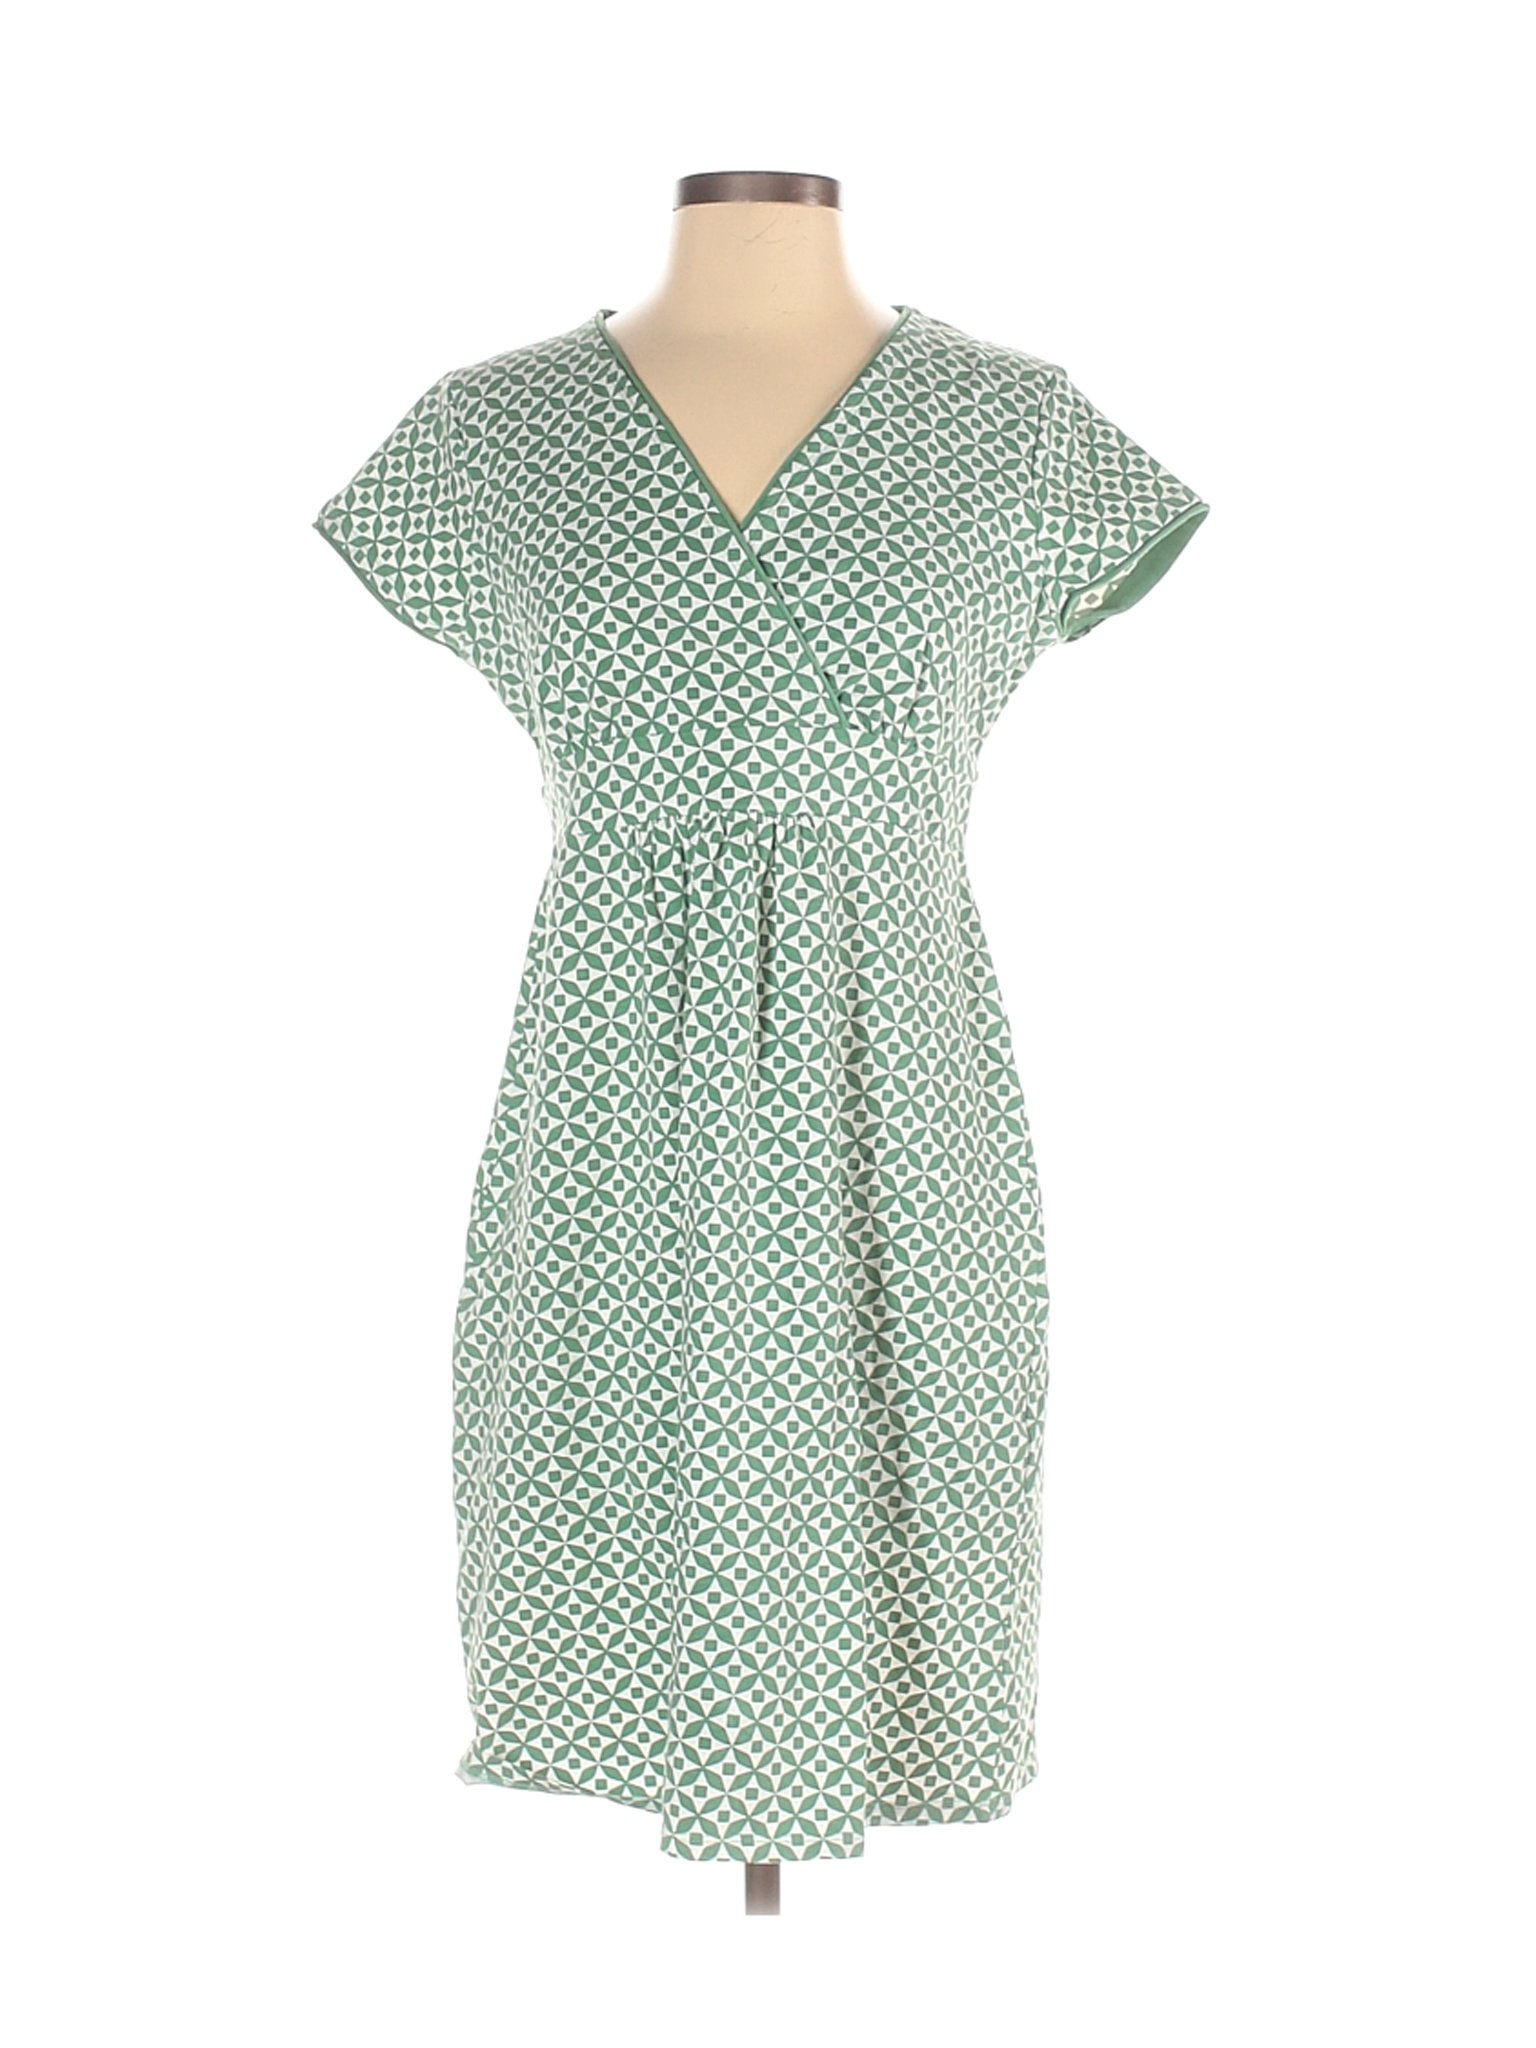 Boden Women Green Casual Dress 8 | eBay